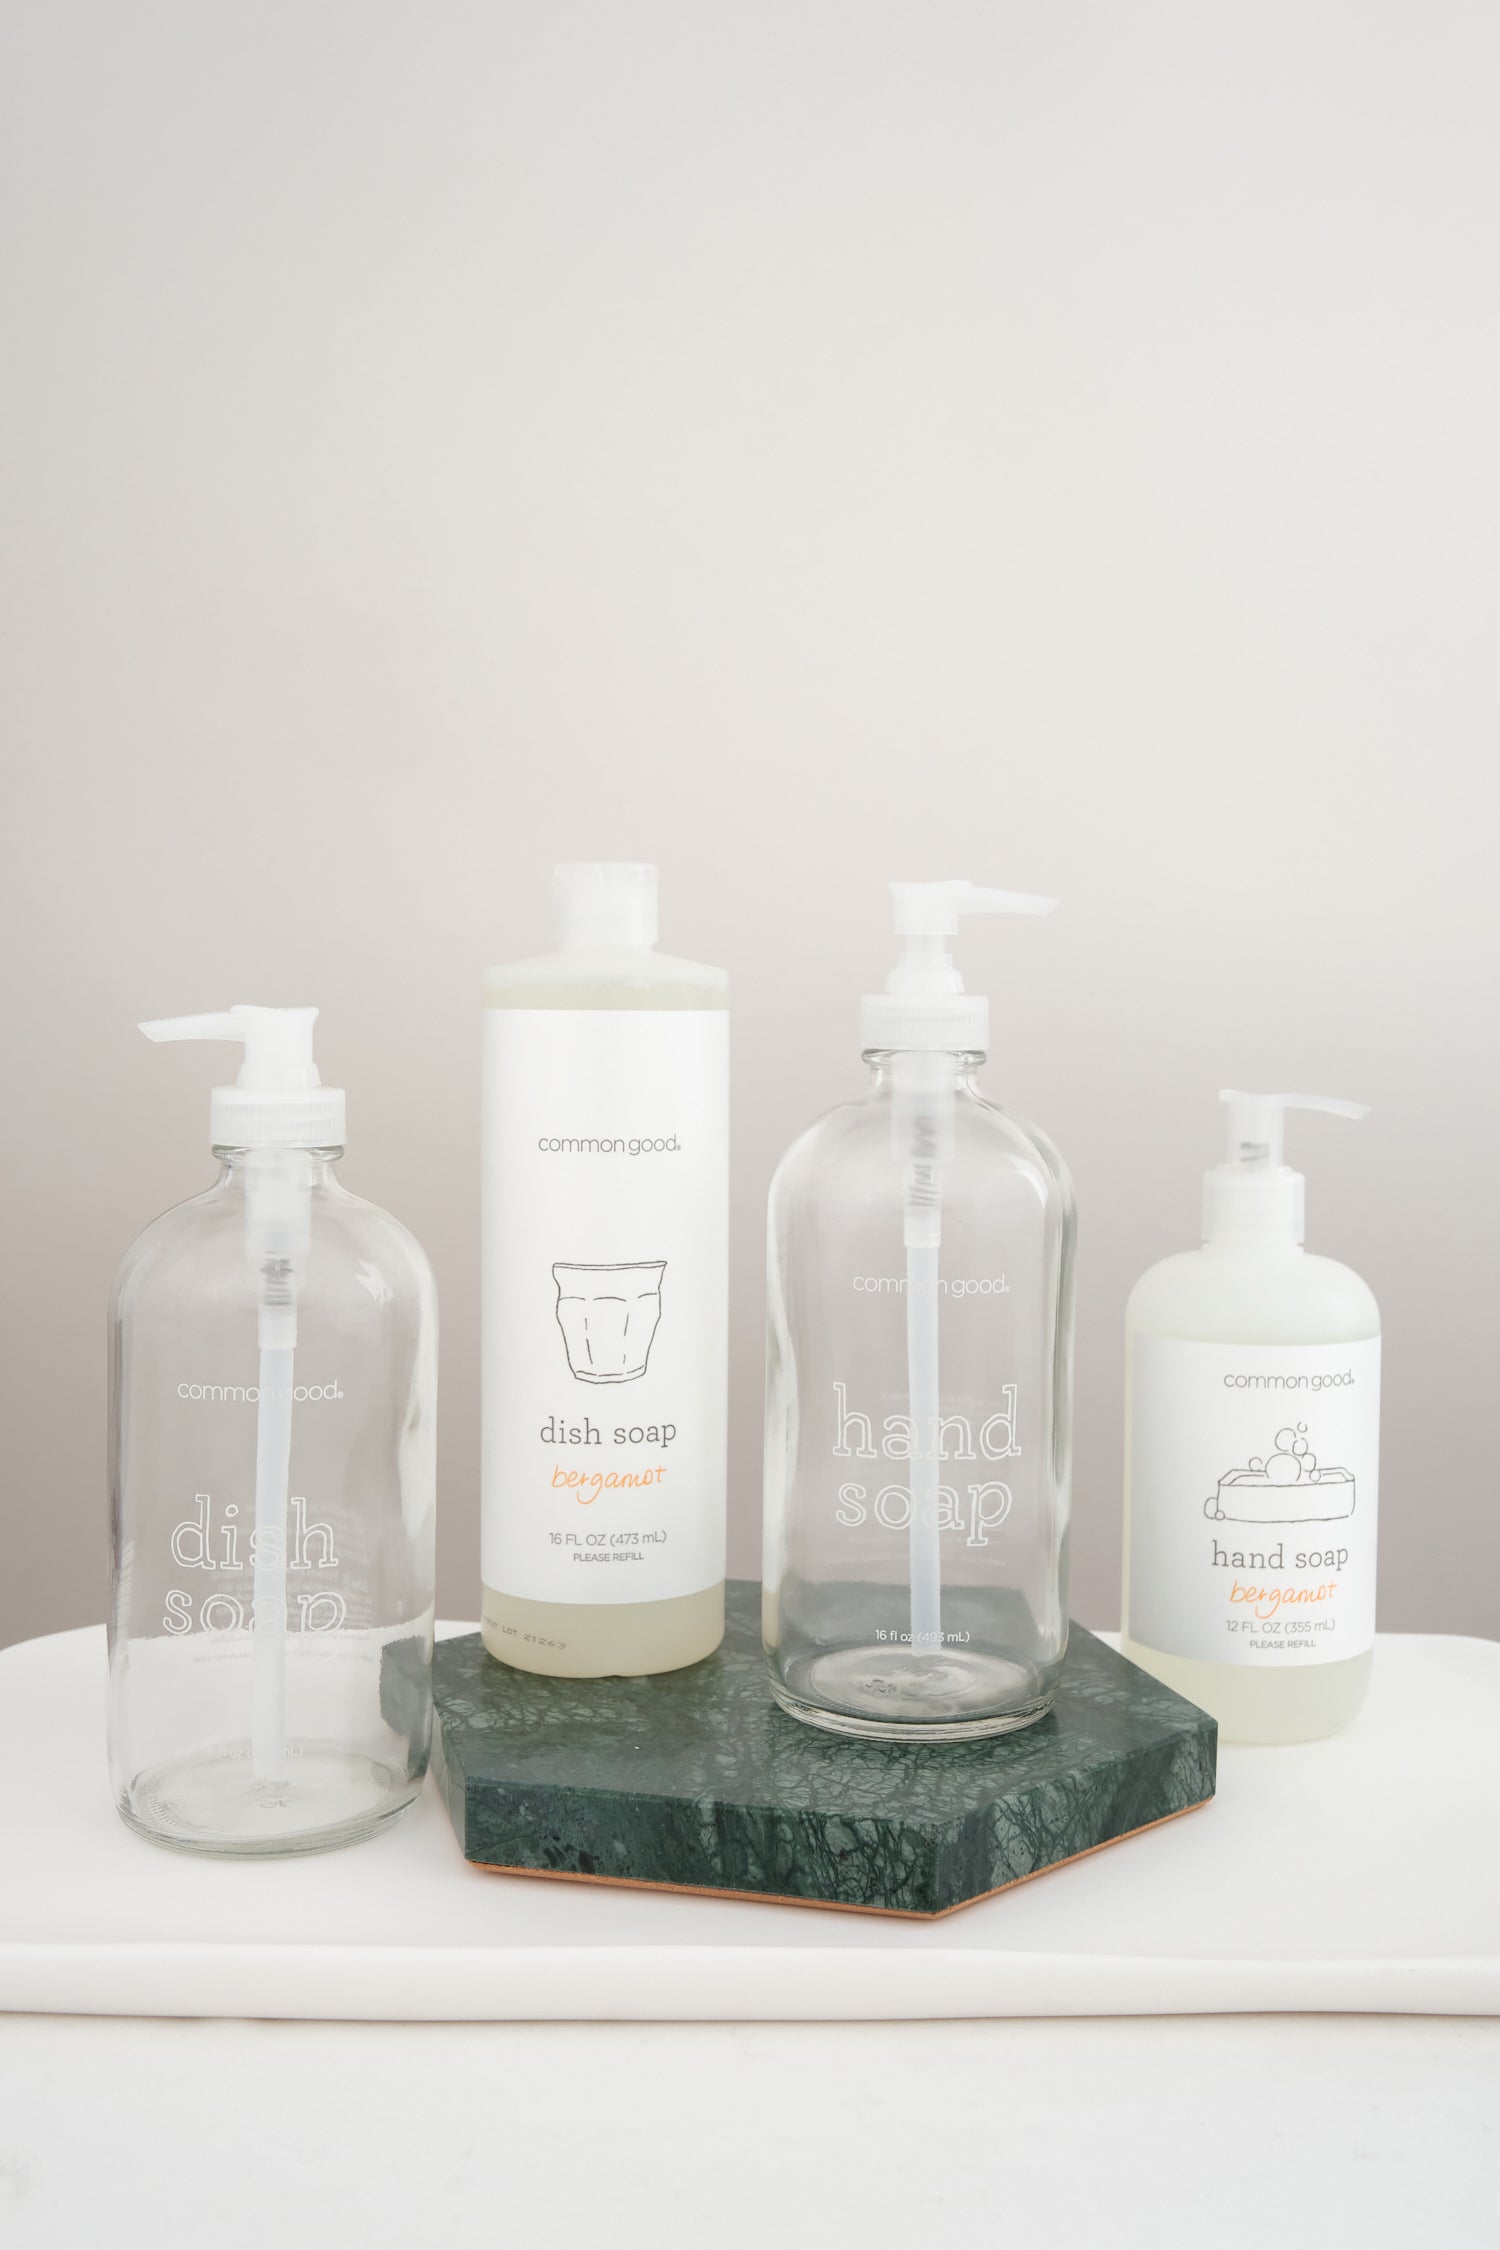 DISH SOAP — good bottle refill shop